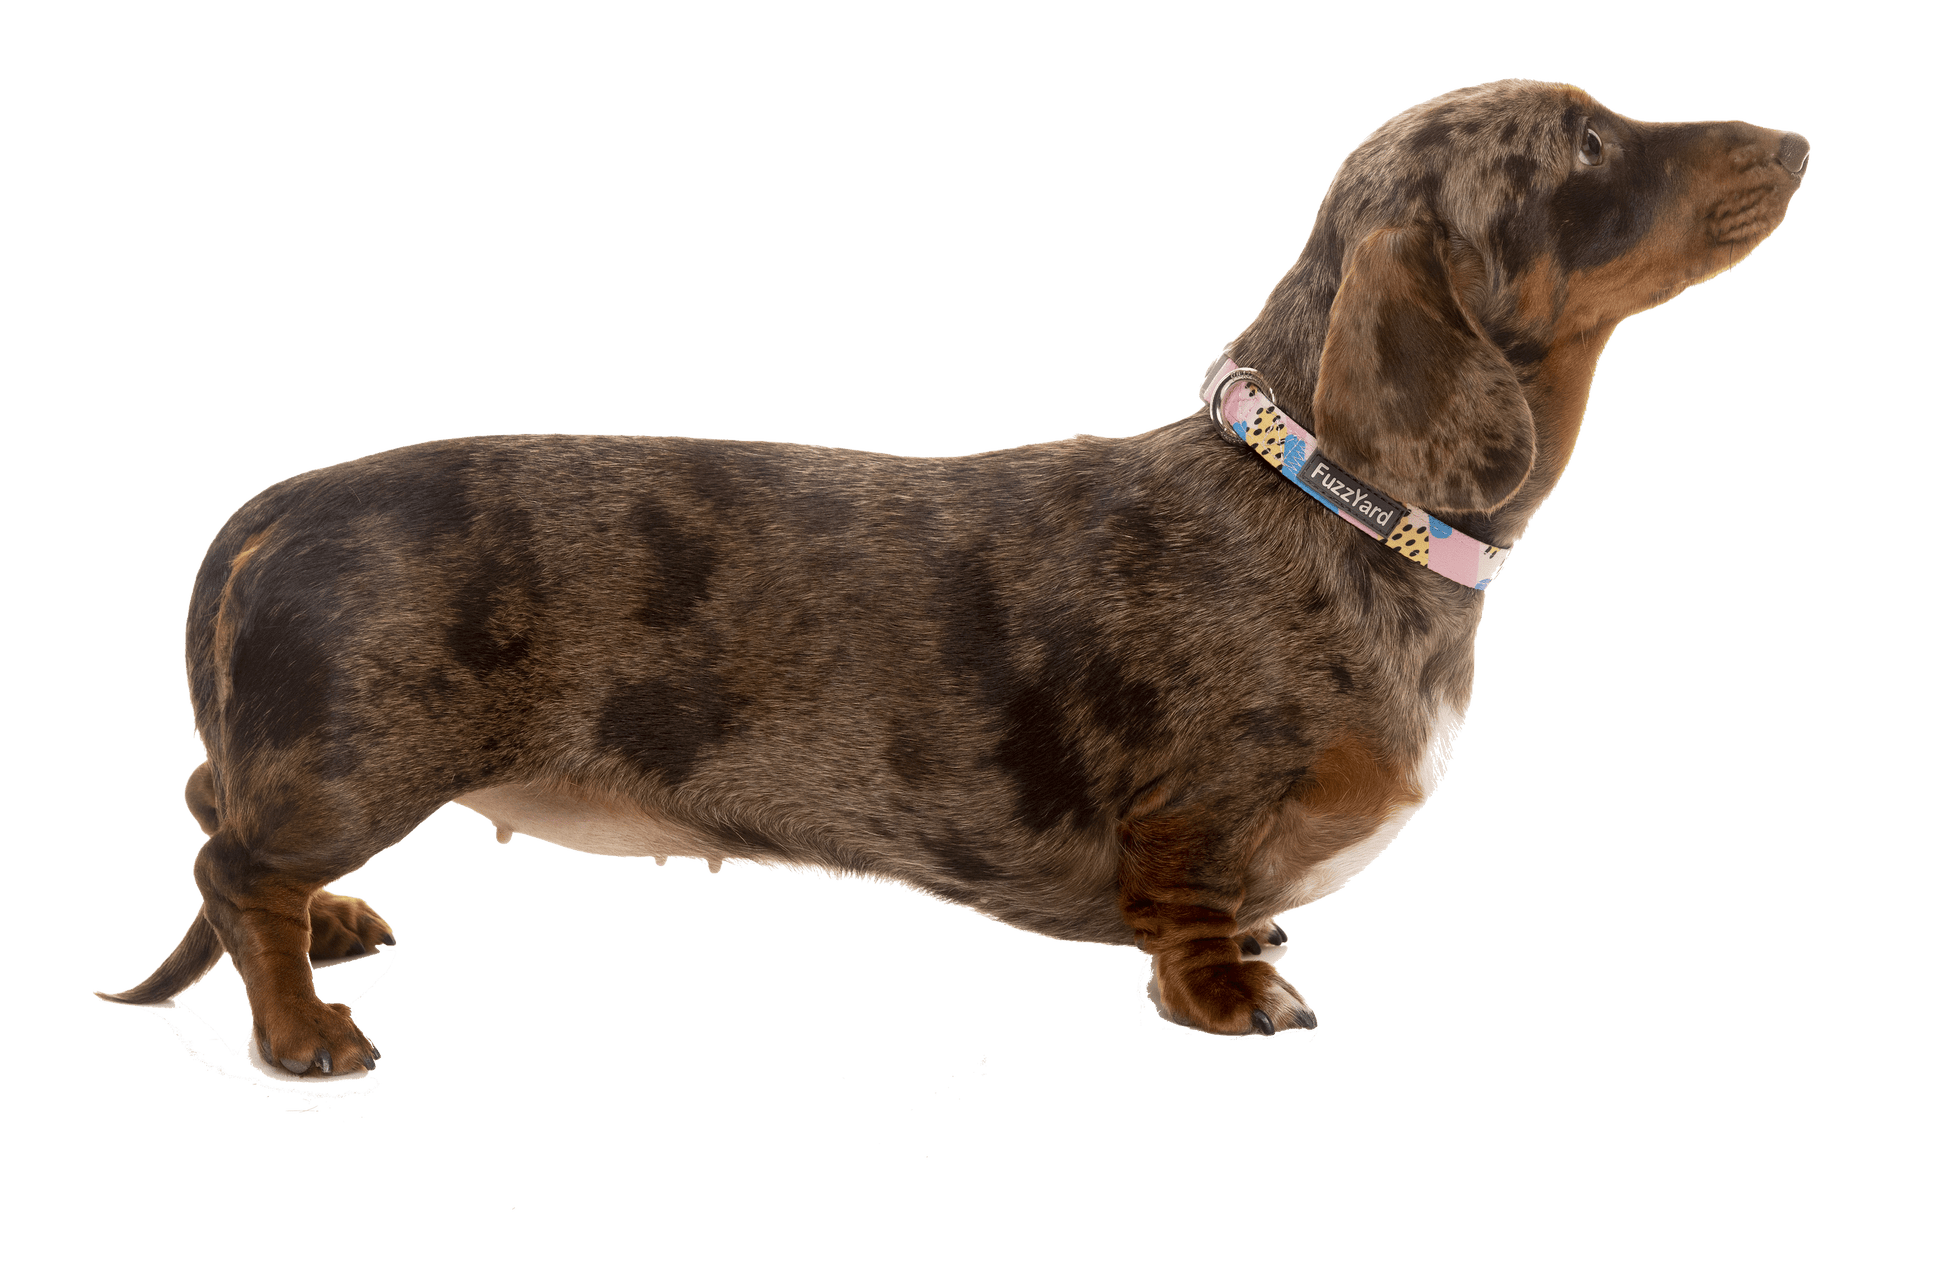 Fuzzyard Dog Collar - Jiggy - Multiple Sizes - Petzyo